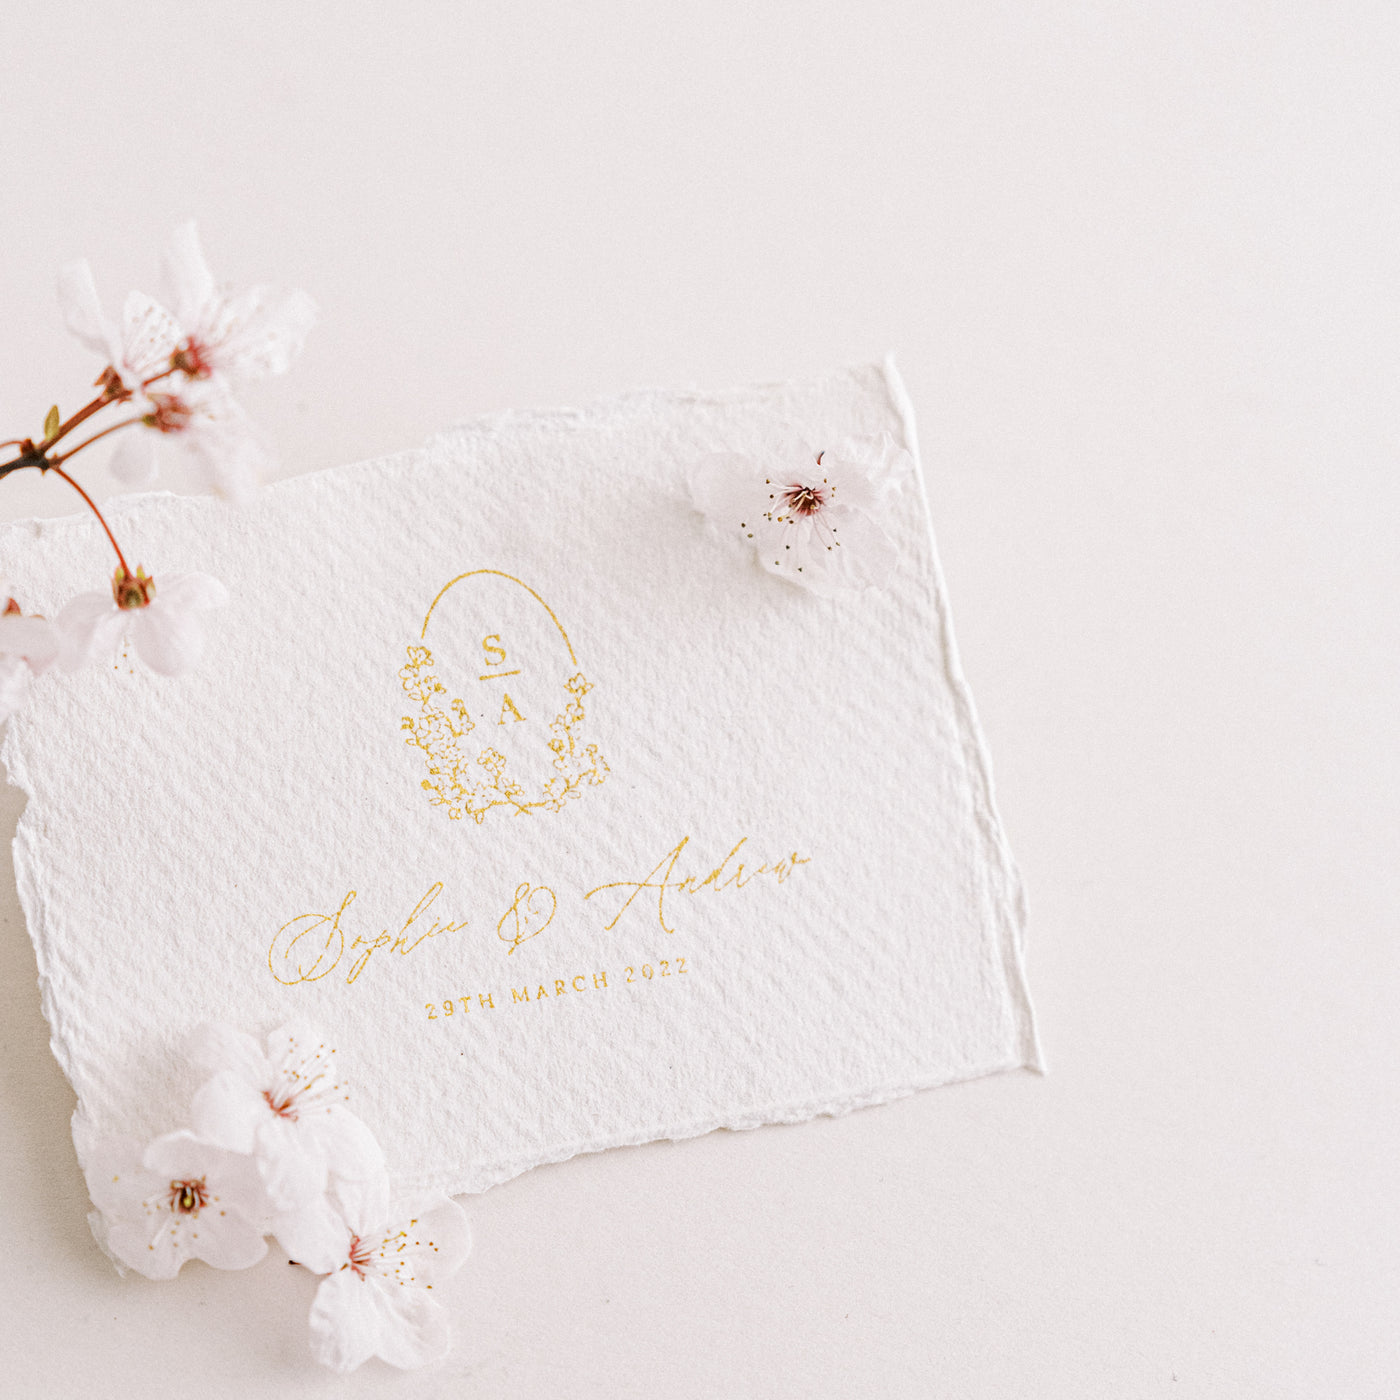 Cherri Cherry Blossom Save The Date Rubber Stamp for Fine Art Wedding Invitations | 'Sakura' Cherry Blossom Embellishments for Blush Pink Spring Wedding | Heirloom Seals